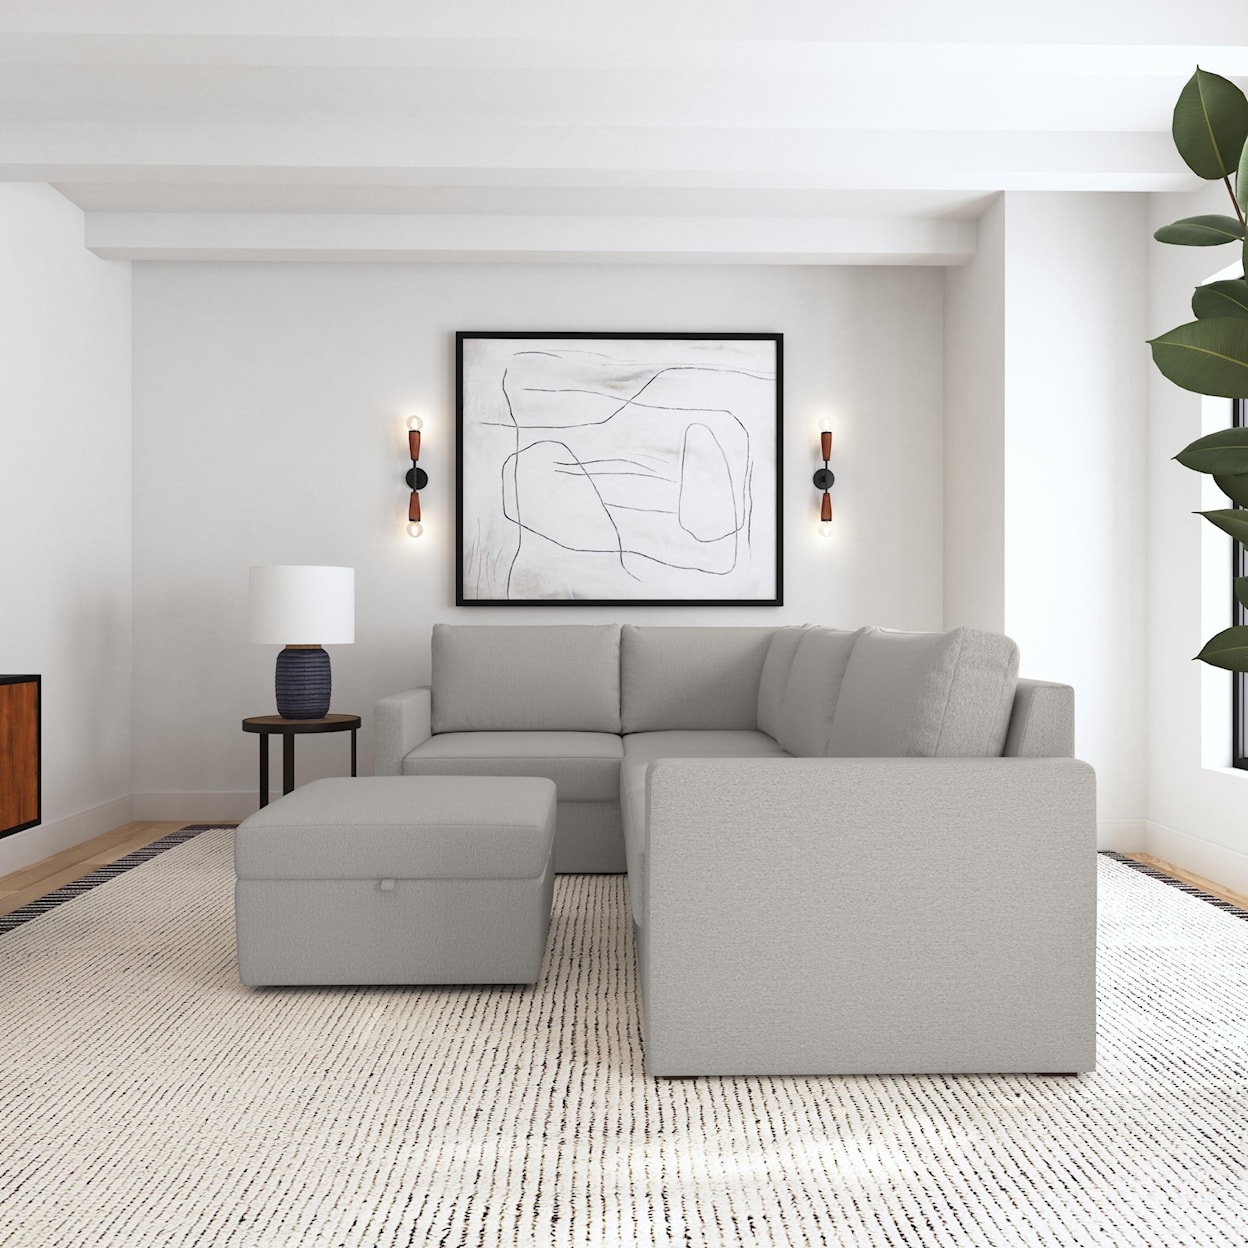 Flexsteel Flex Sectional Sofa with Storage Ottoman